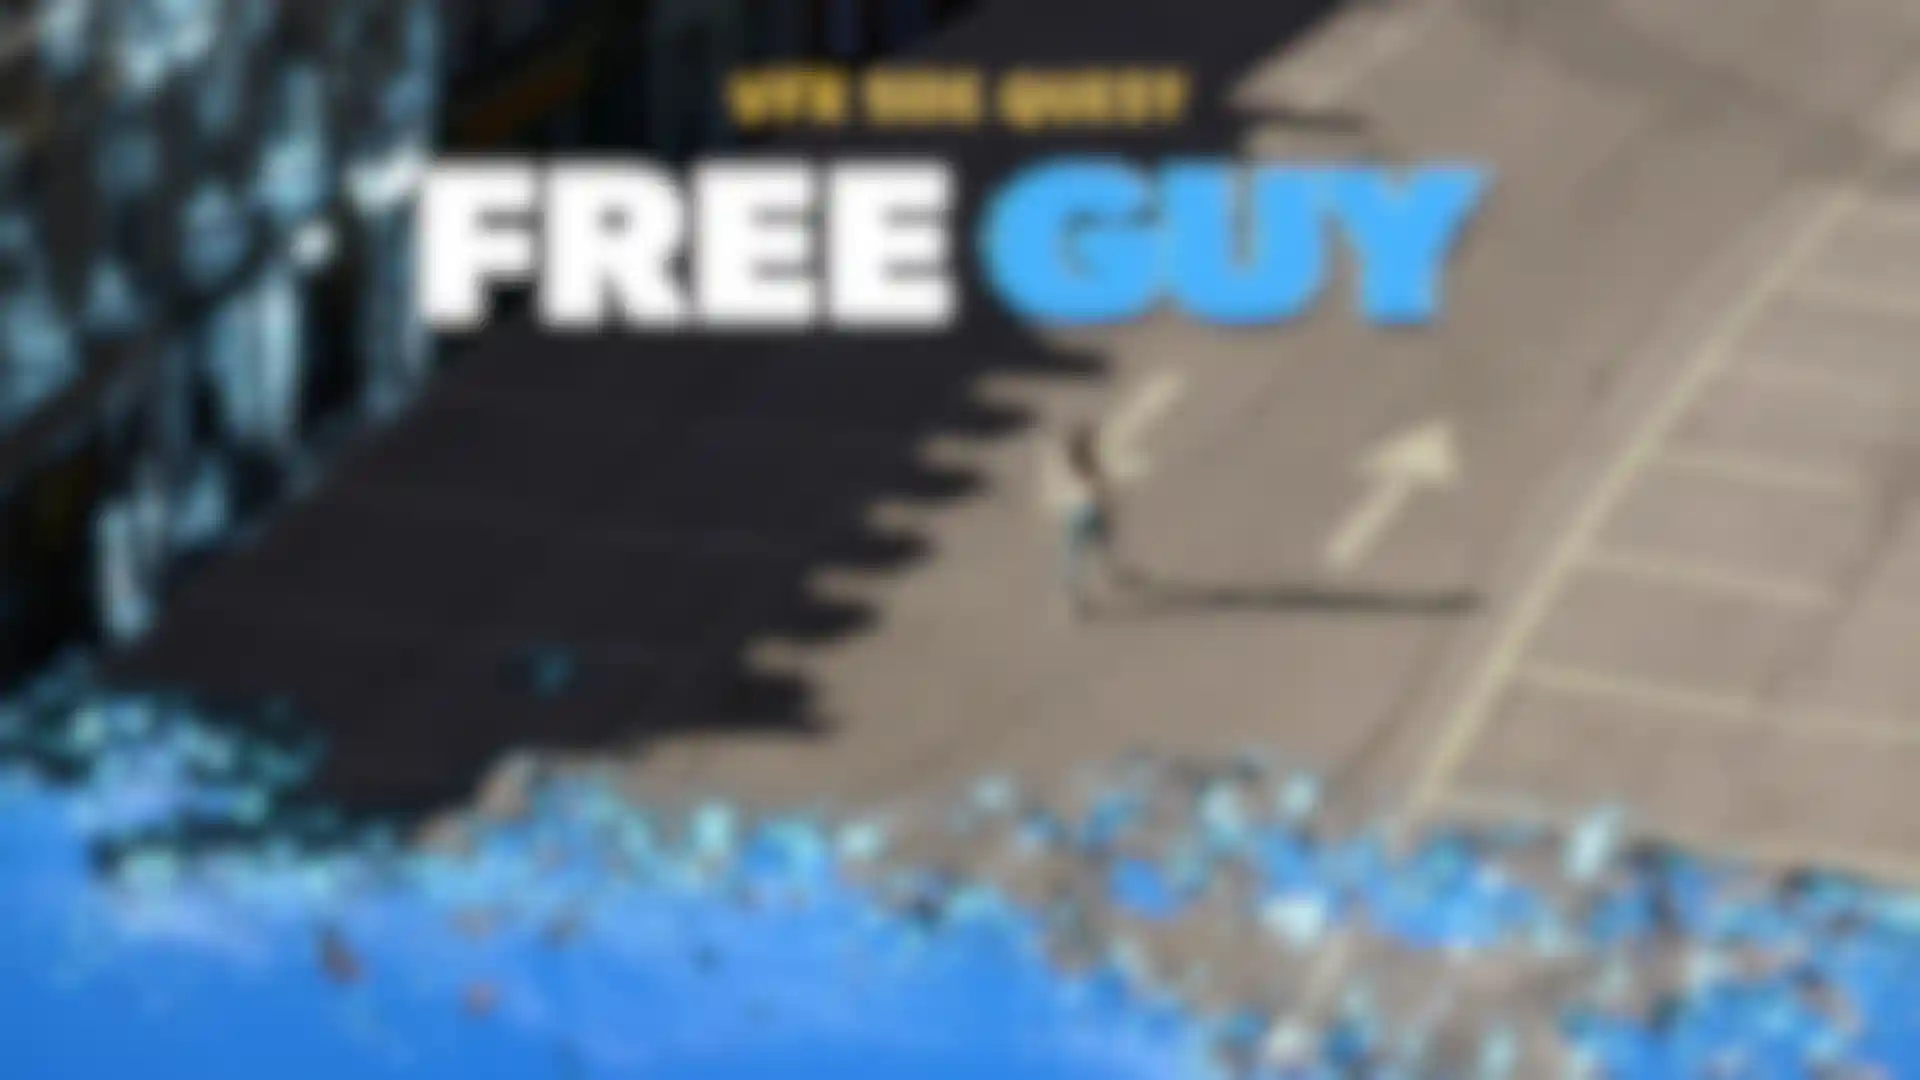 New VFX Side Quest - “Free Guy” Movie VFX Tutorial image